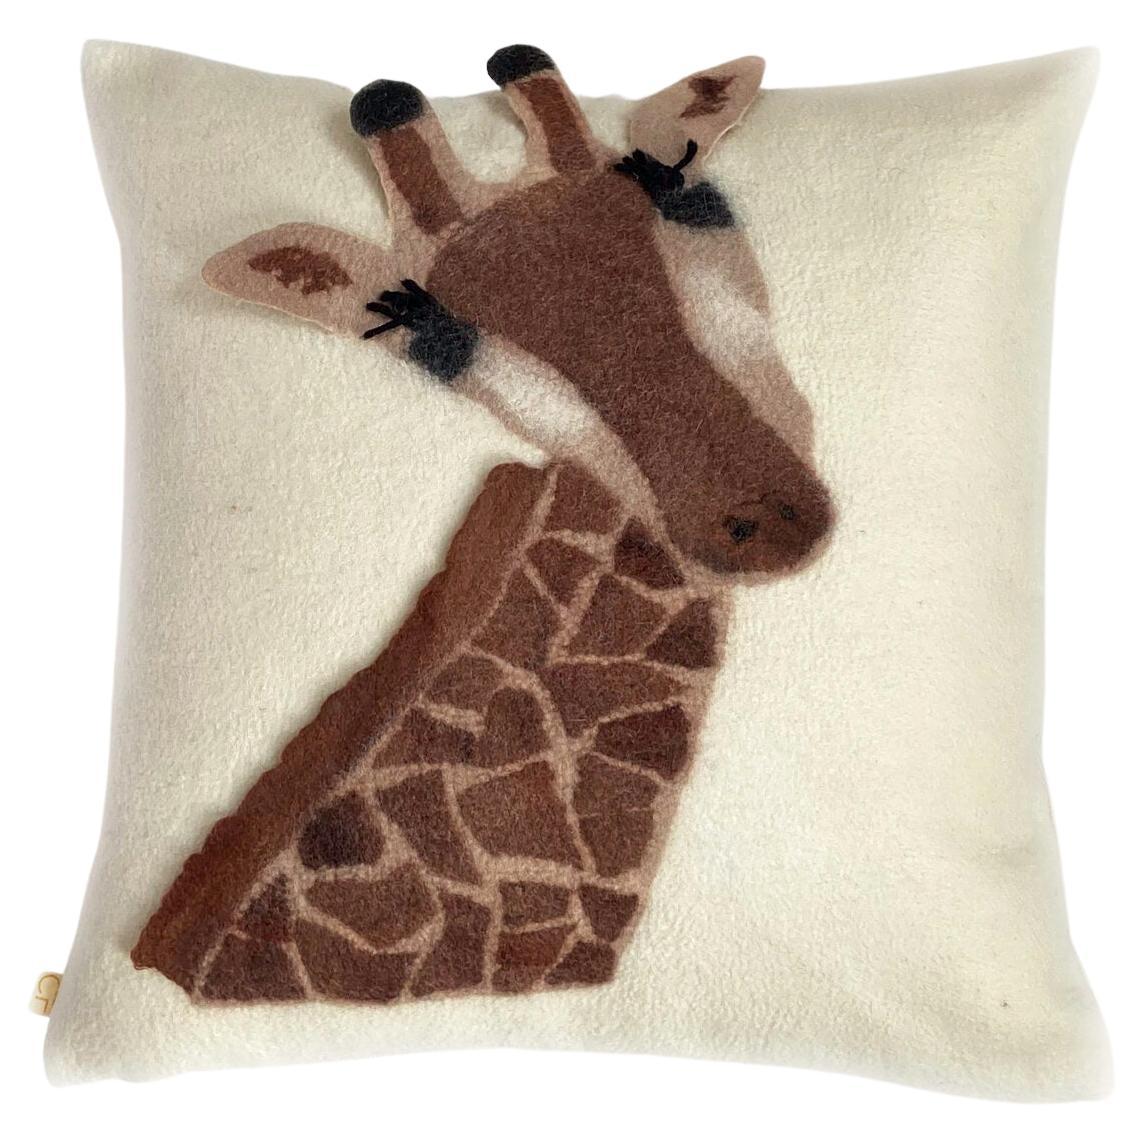 Contemporary Handmade Wool Pillows with Playful Giraffe Animal